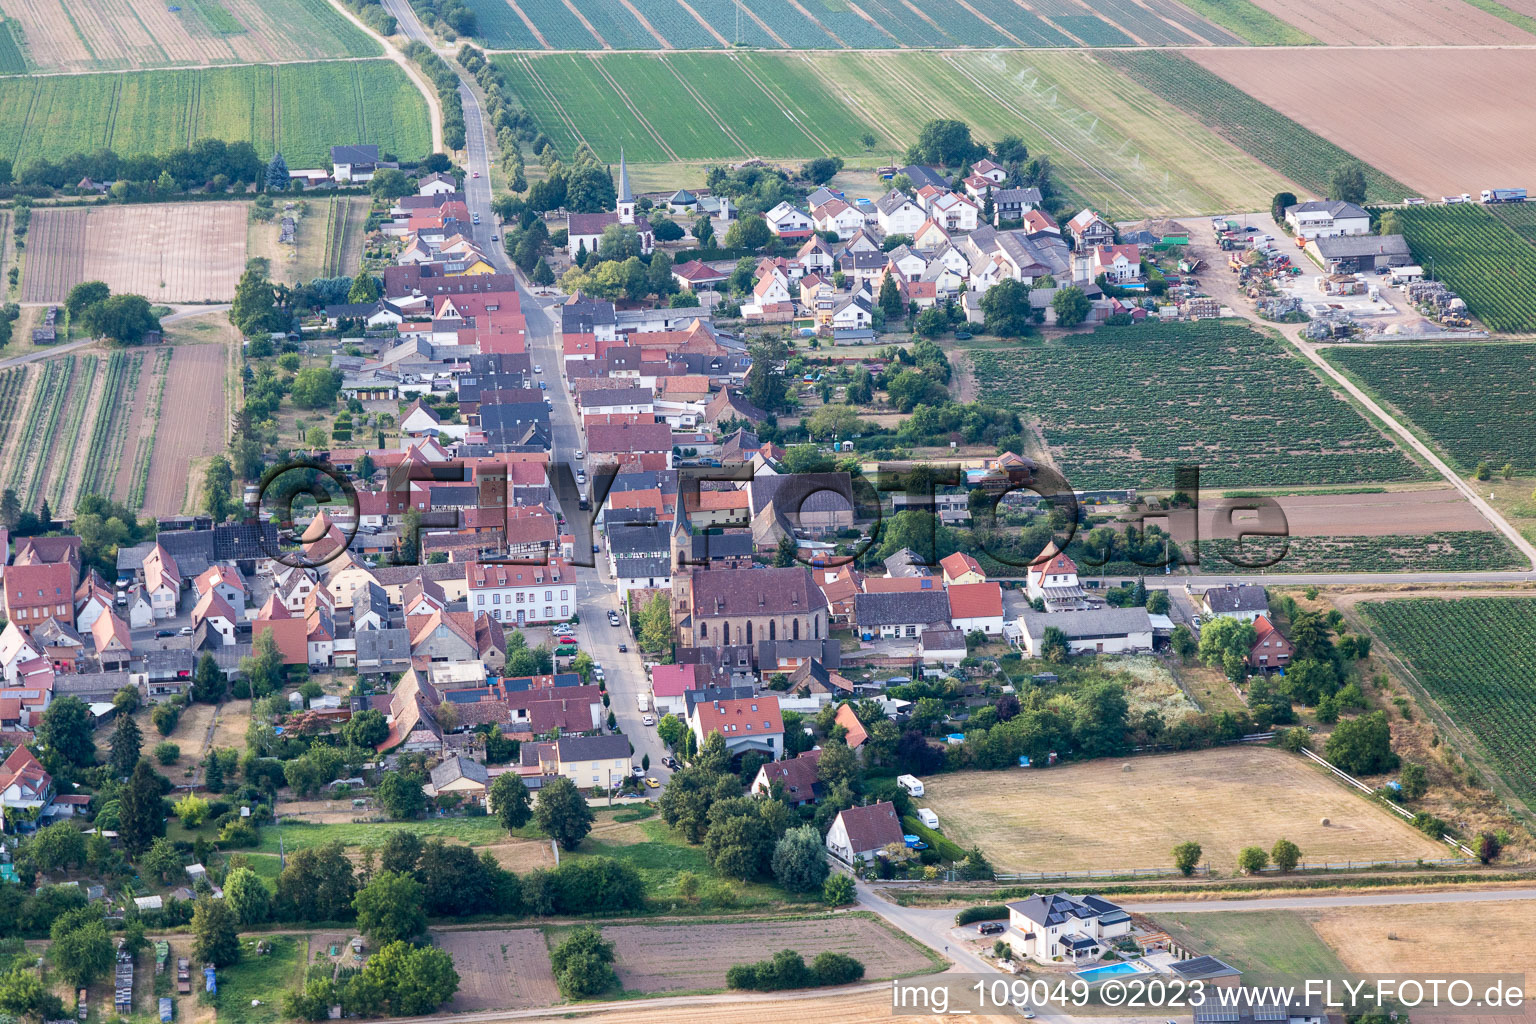 Niederlustadt in the state Rhineland-Palatinate, Germany